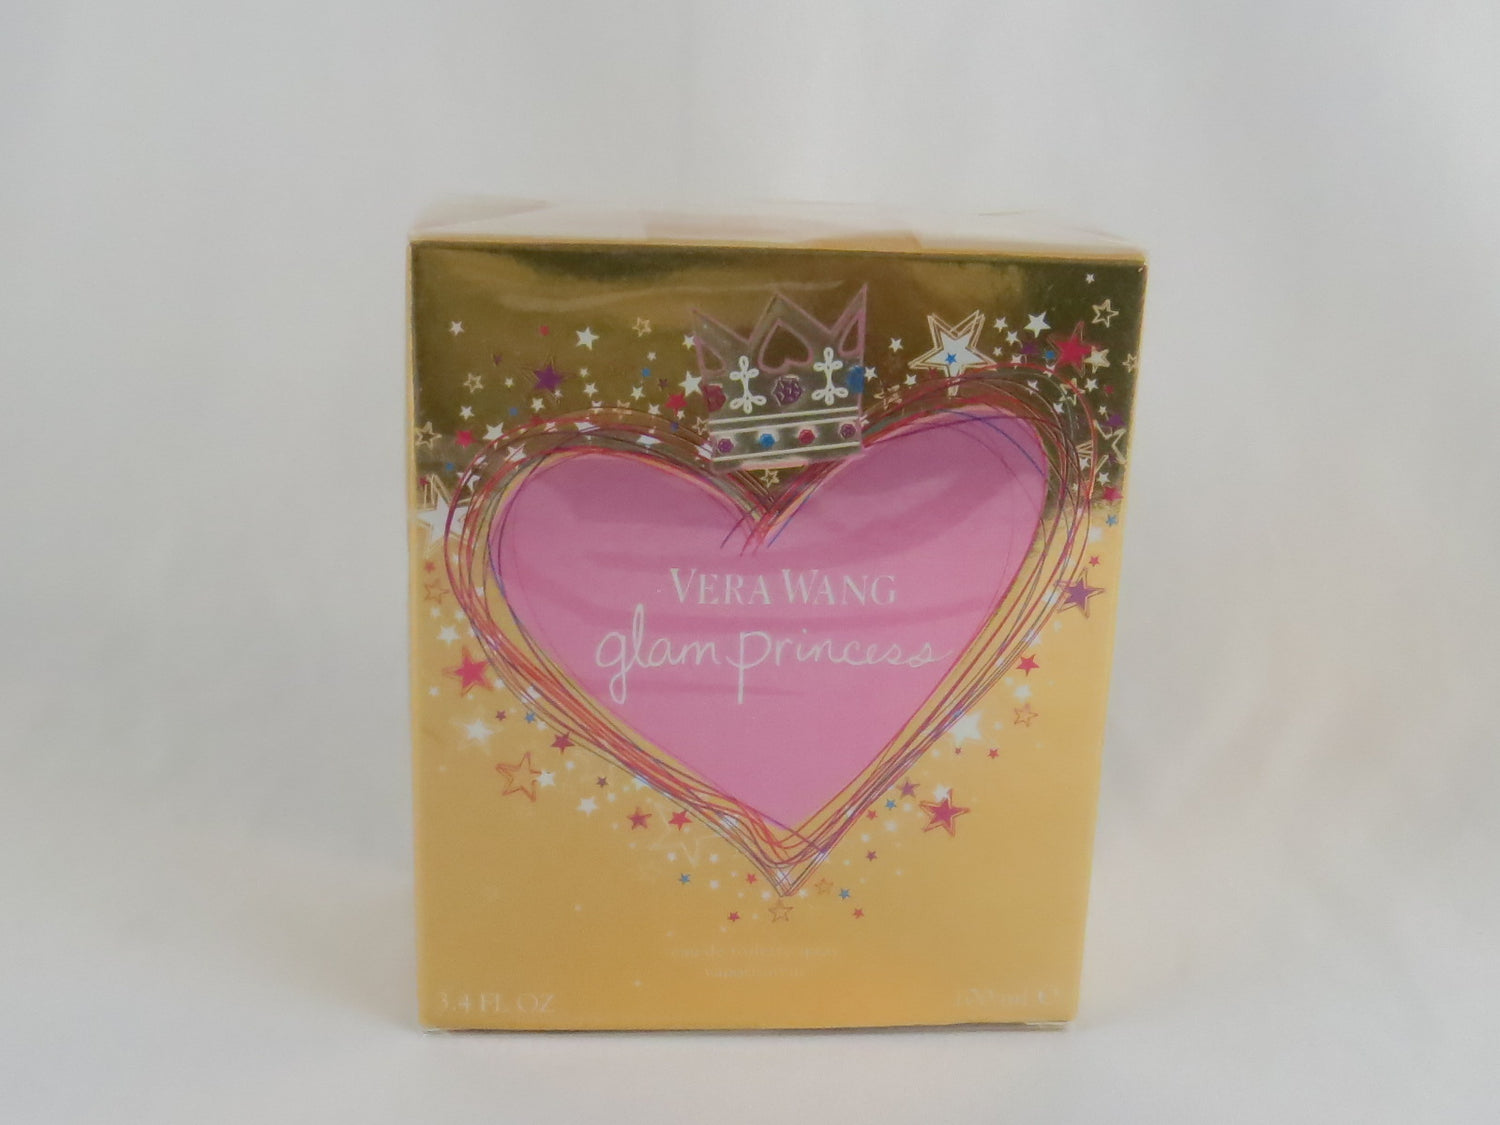 Perfume Vera Wang Glam Princess by Vera Wang 3.4 oz Eau De Toilette Spray for Women - Banachief Outlet